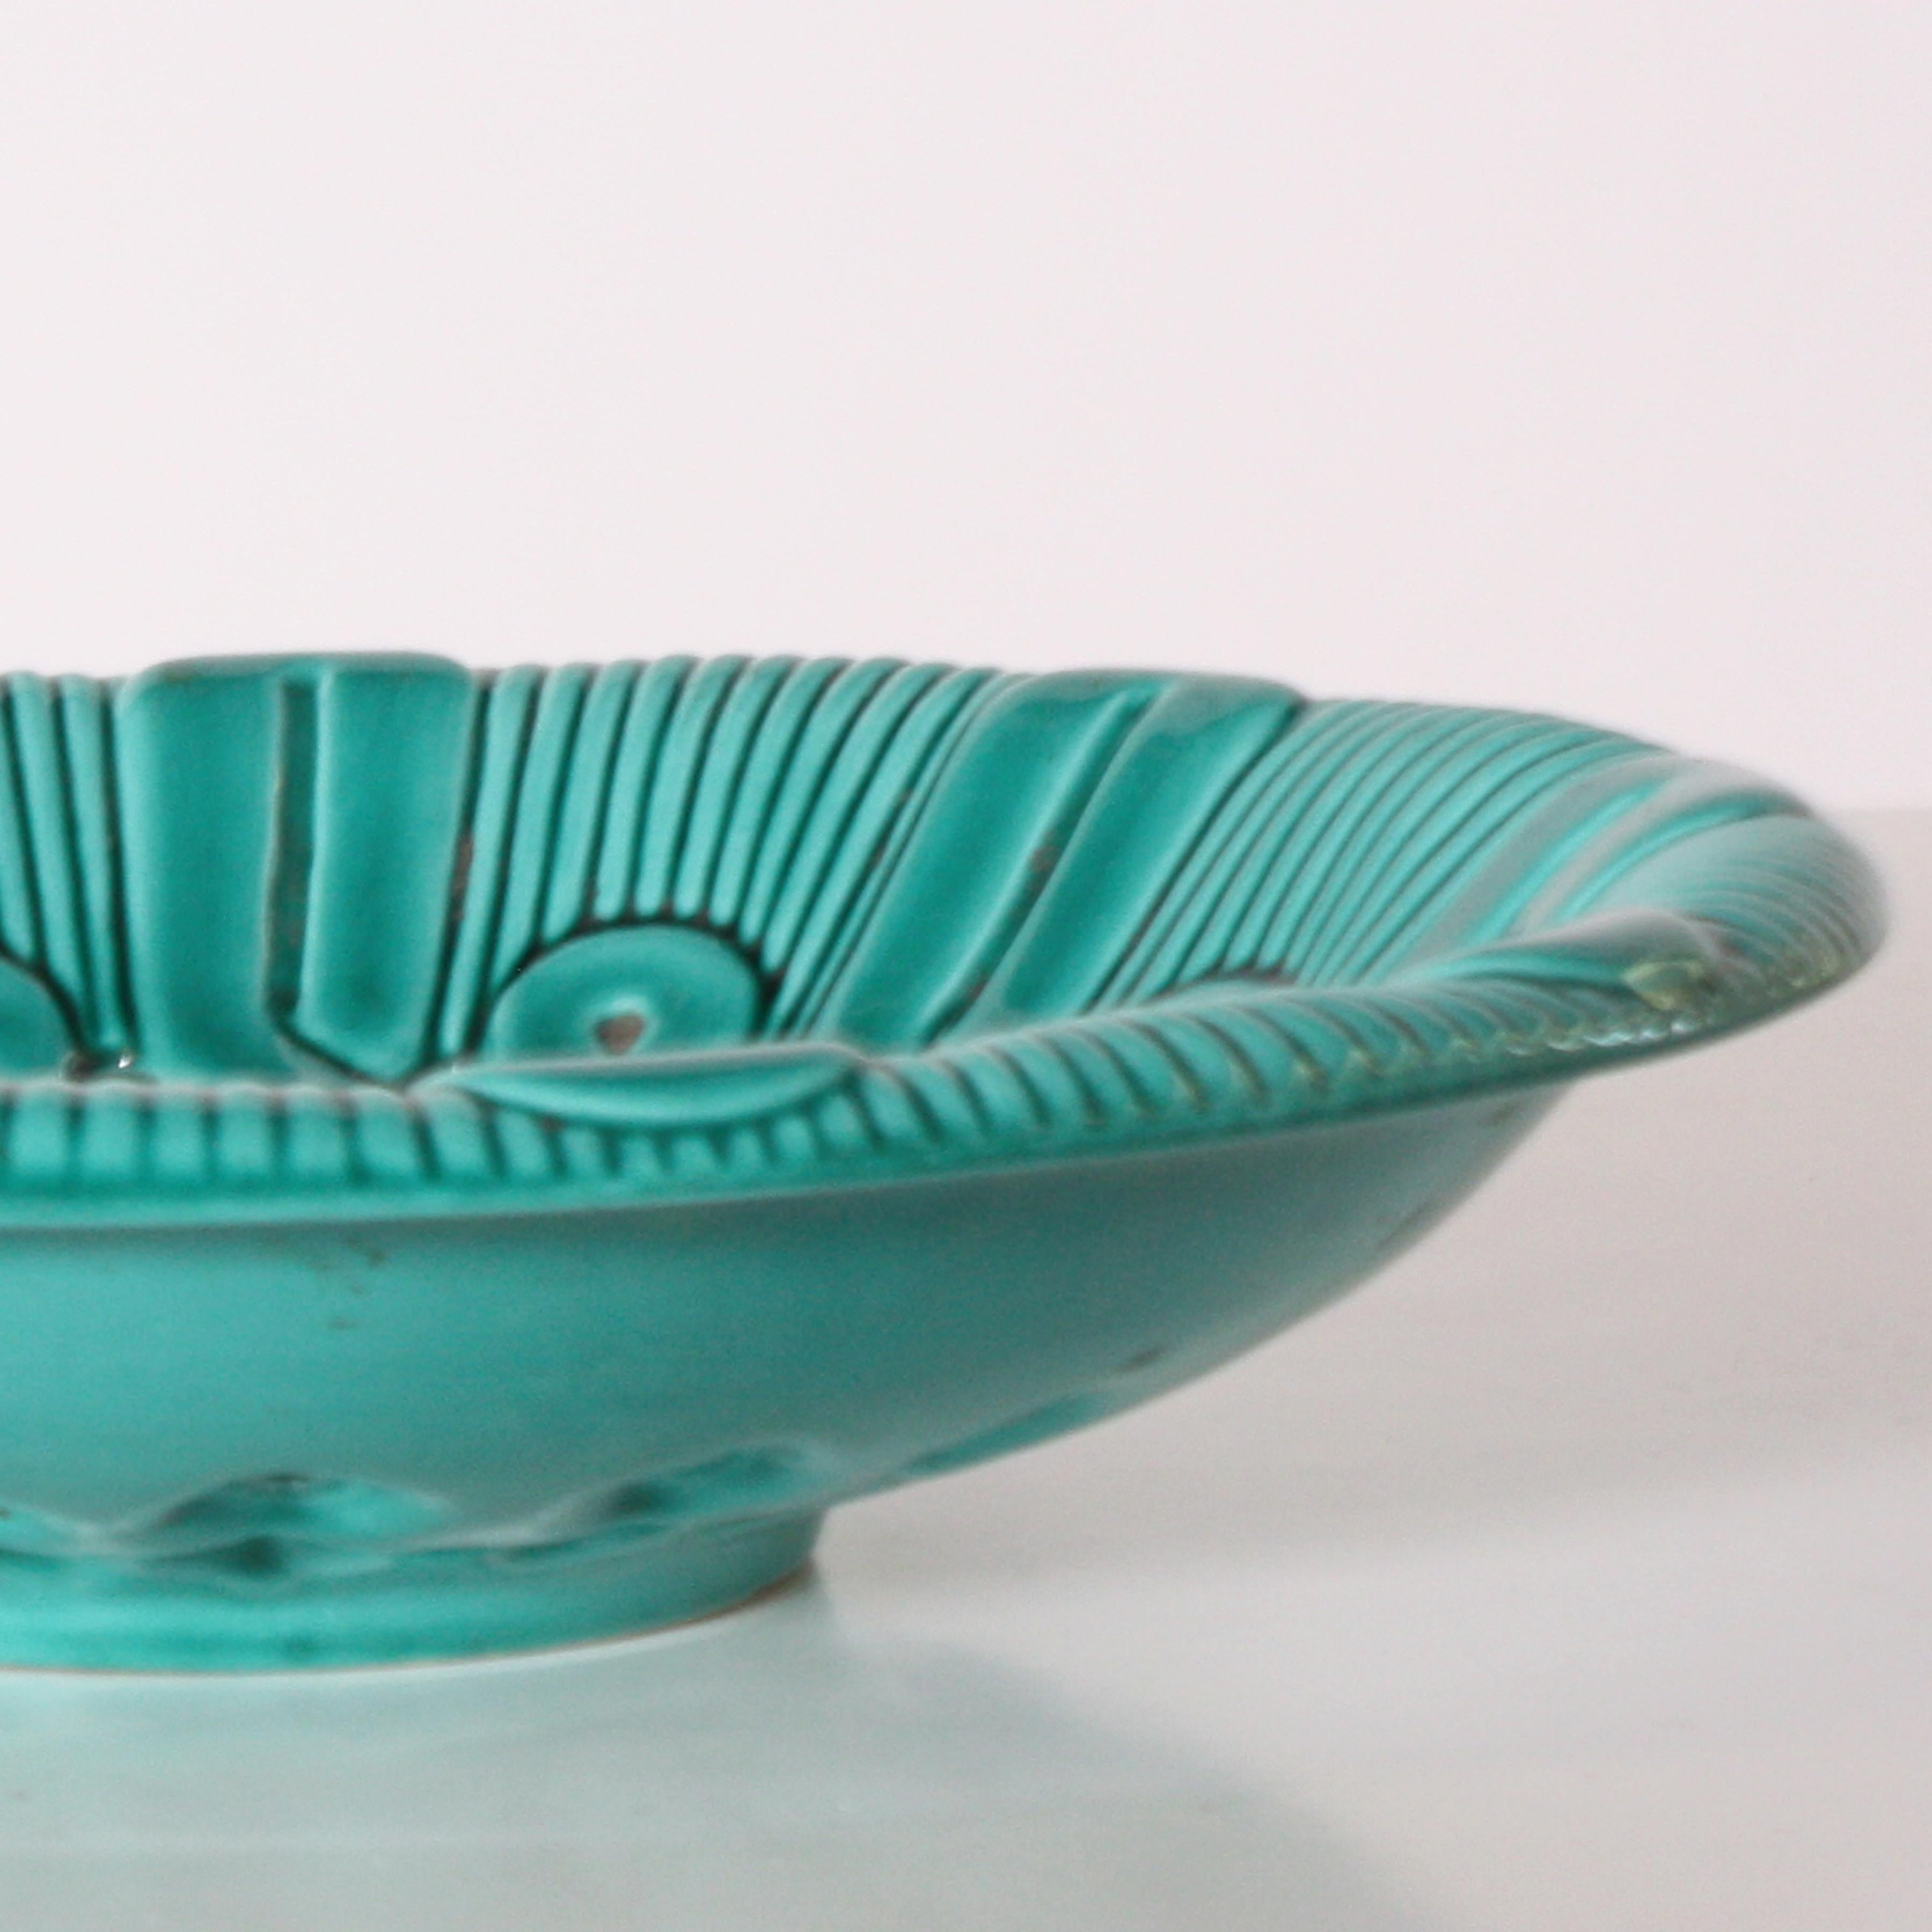 French Vallauris Blue Ceramic Bowl, circa 1950